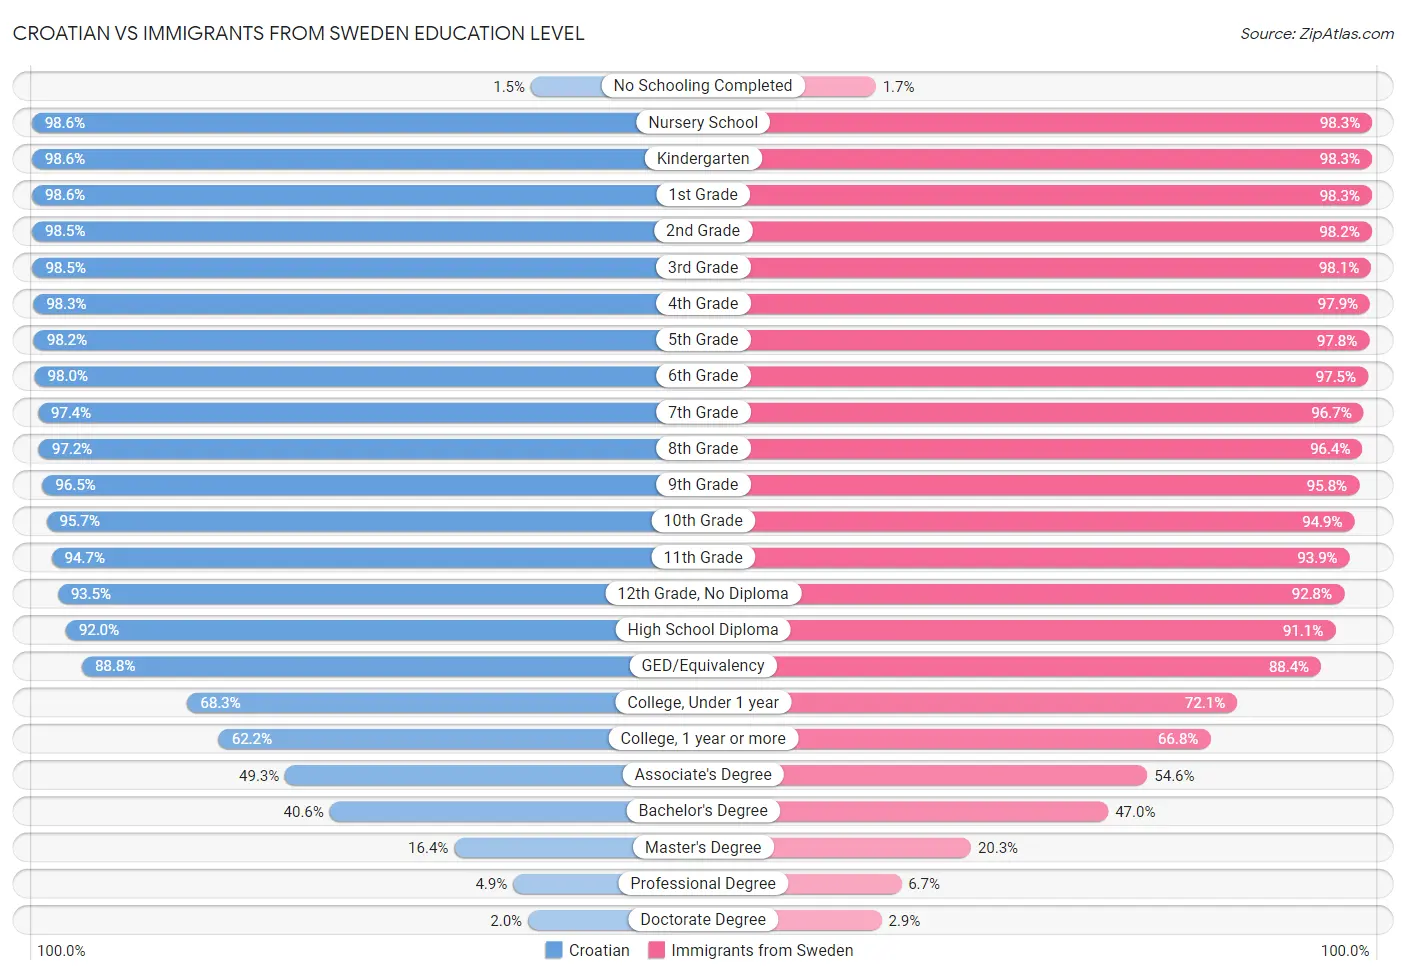 Croatian vs Immigrants from Sweden Education Level